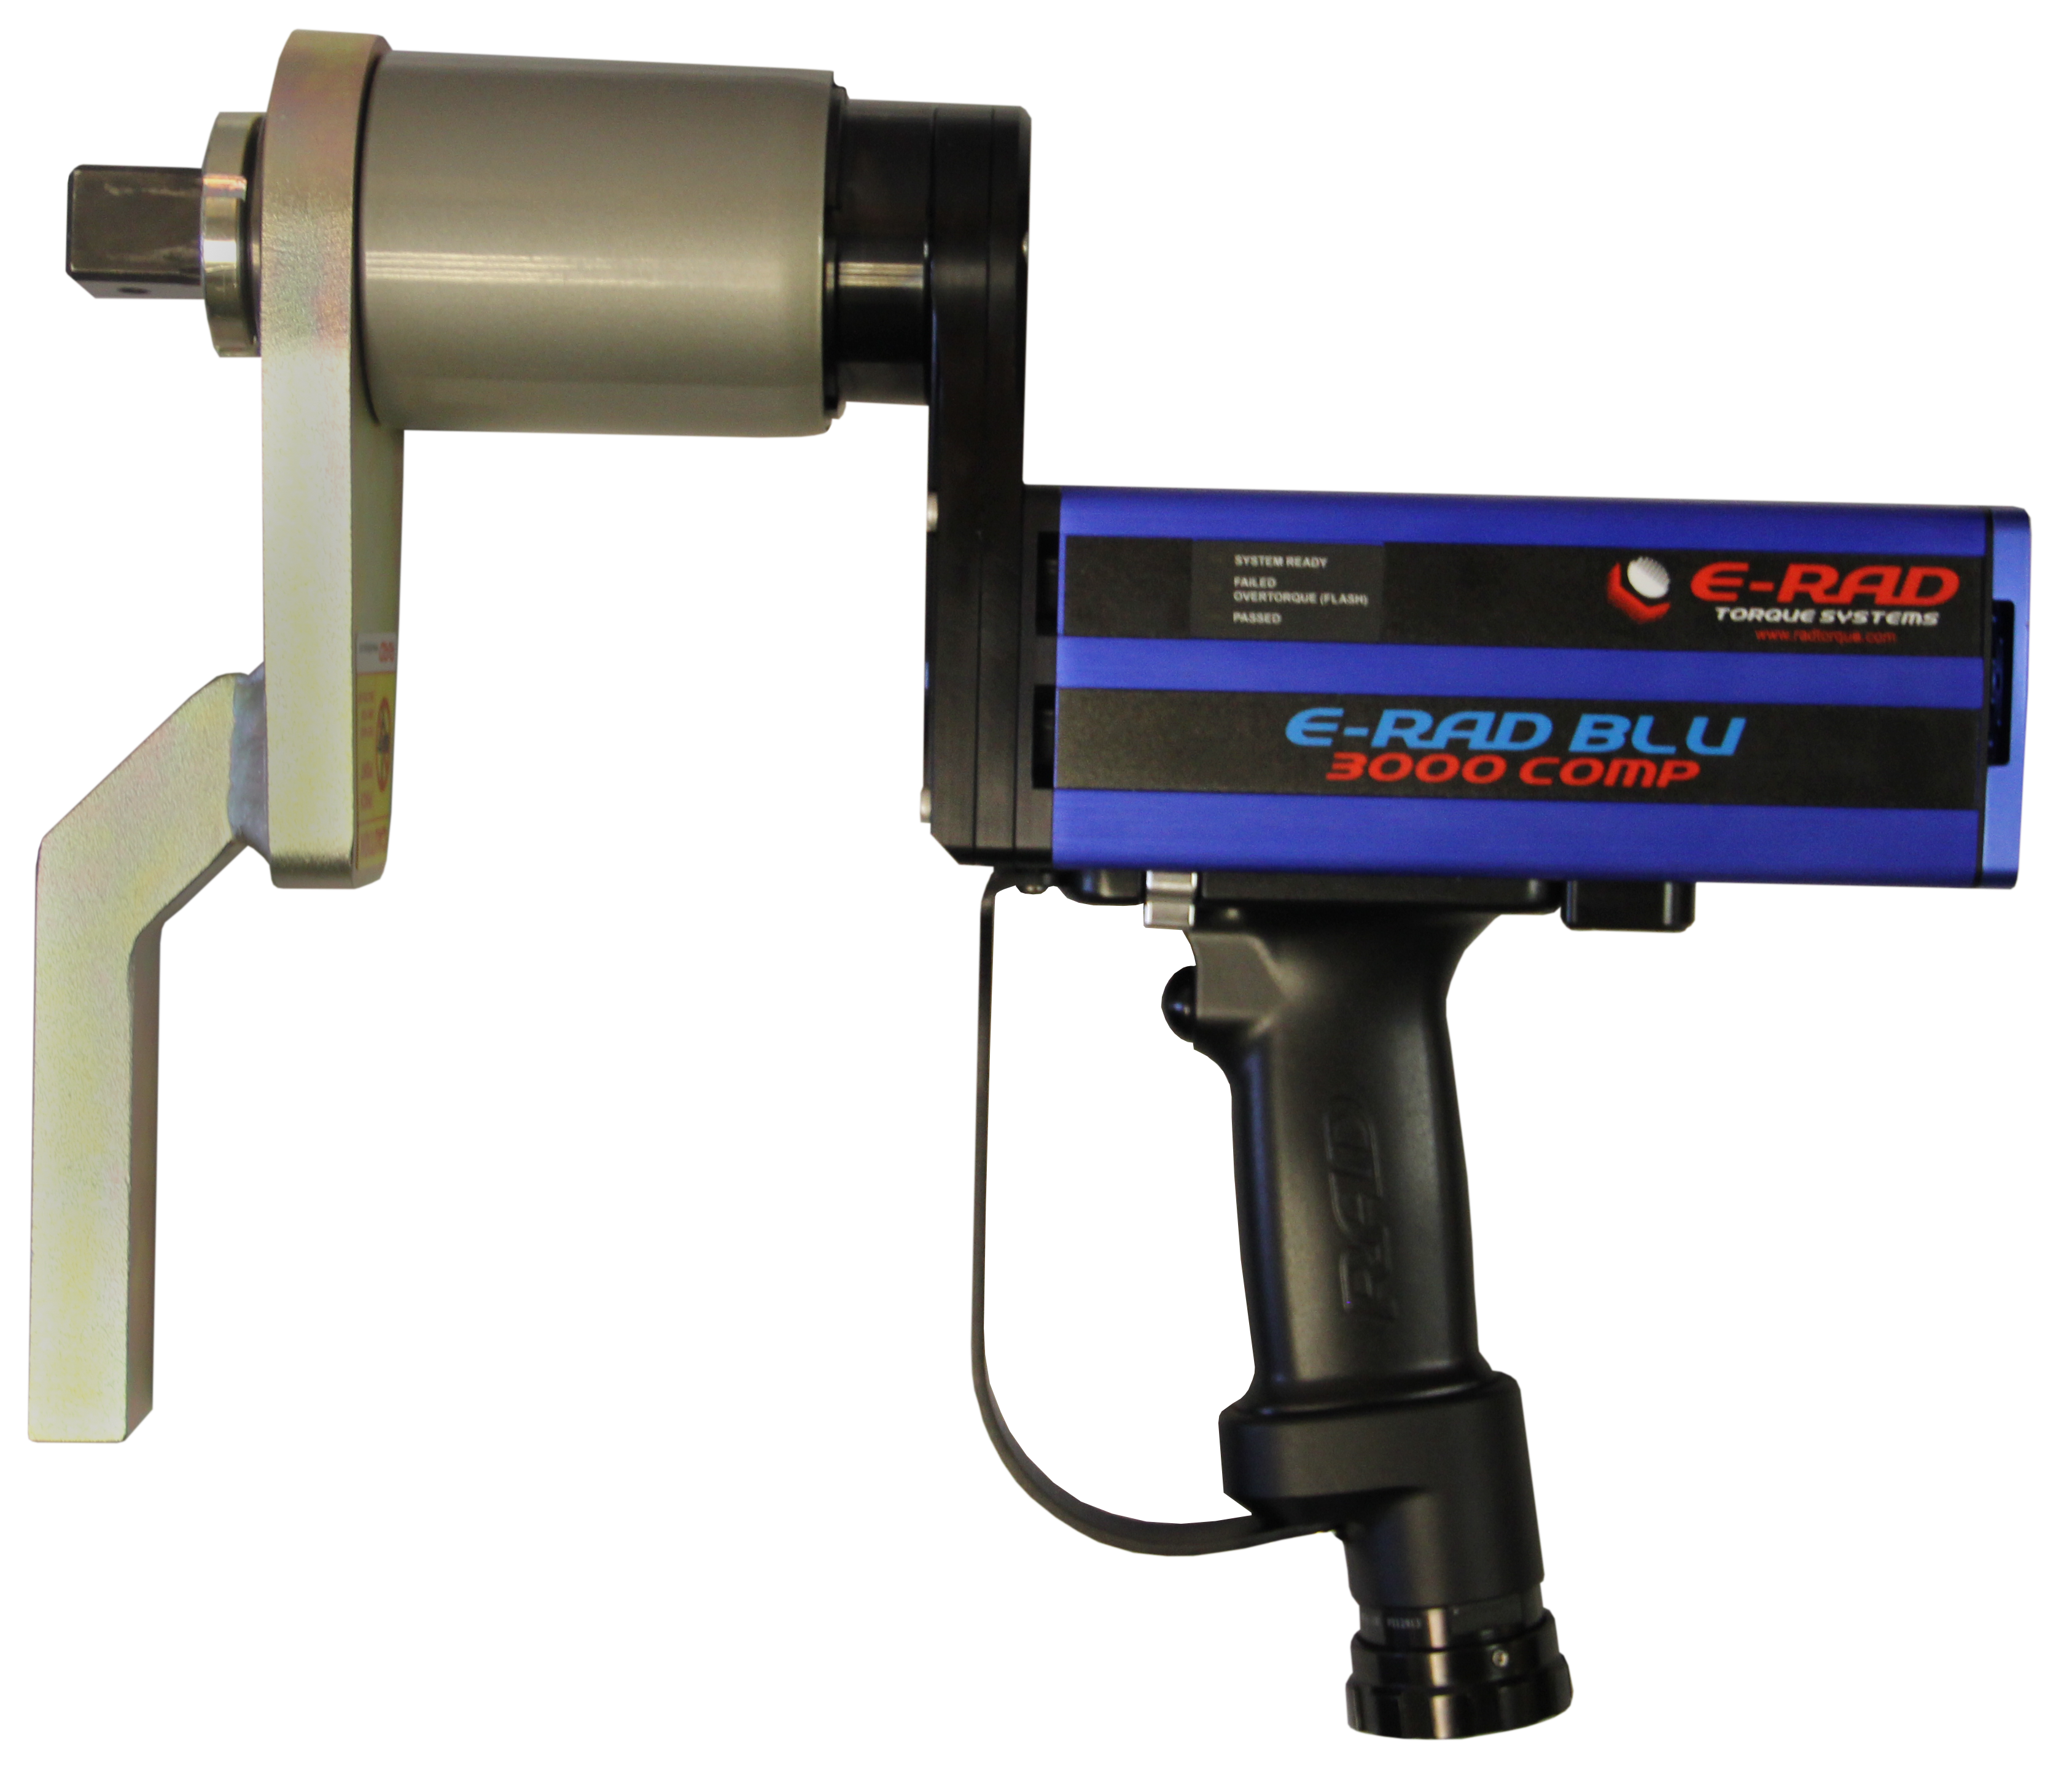 RAD customized torque wrench option for E-RAD 3000 Offset tool